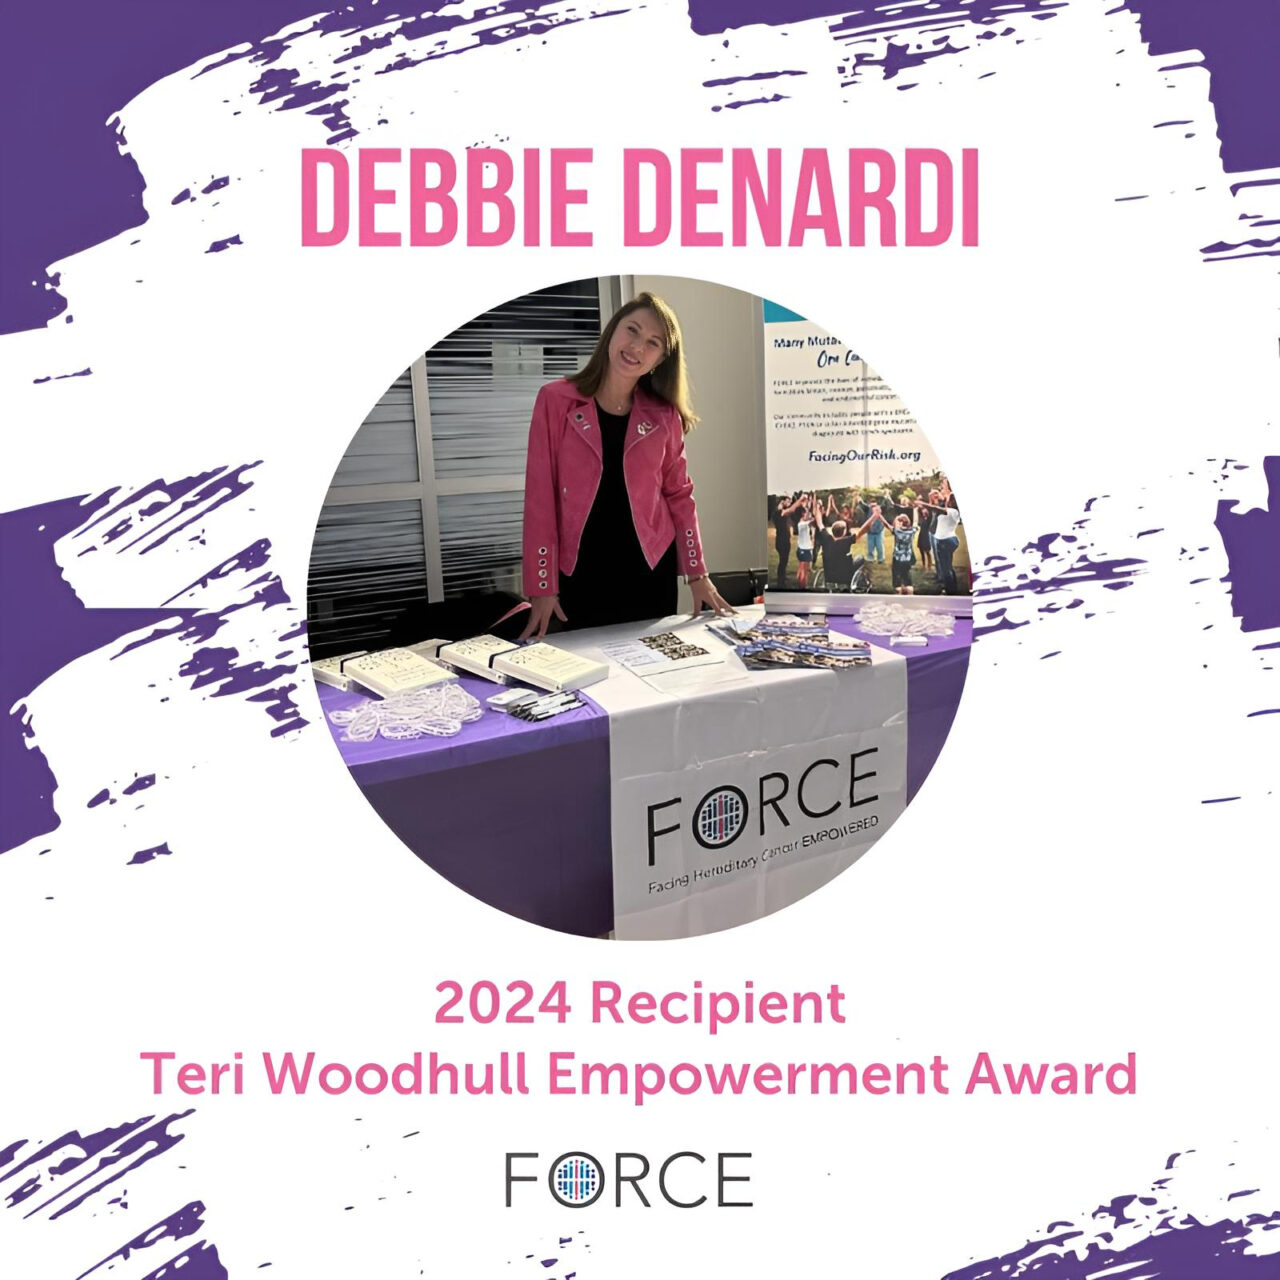 Debbie Denardi: I am honored to be the recipient of the 2024 Teri Woodhull Empowerment Award!